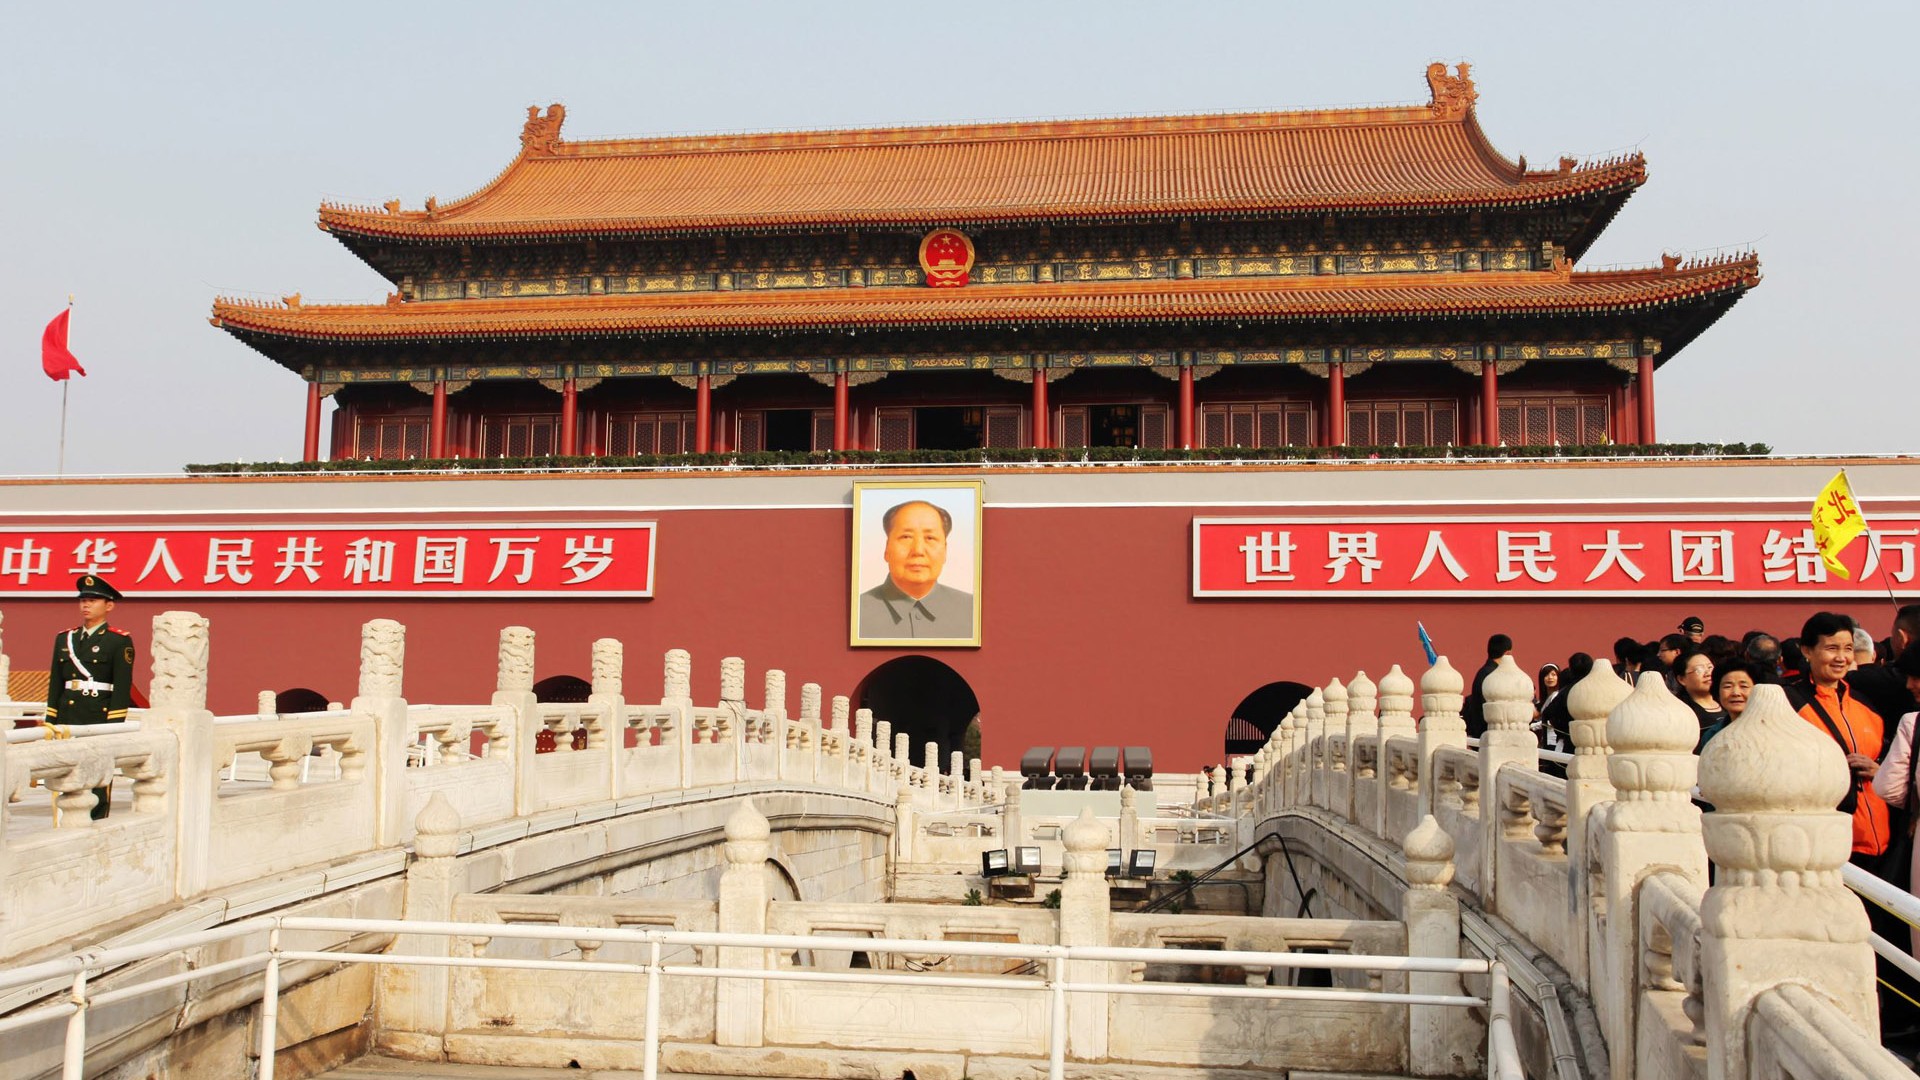 Tour Beijing - Tiananmen Square (ggc works) #1 - 1920x1080